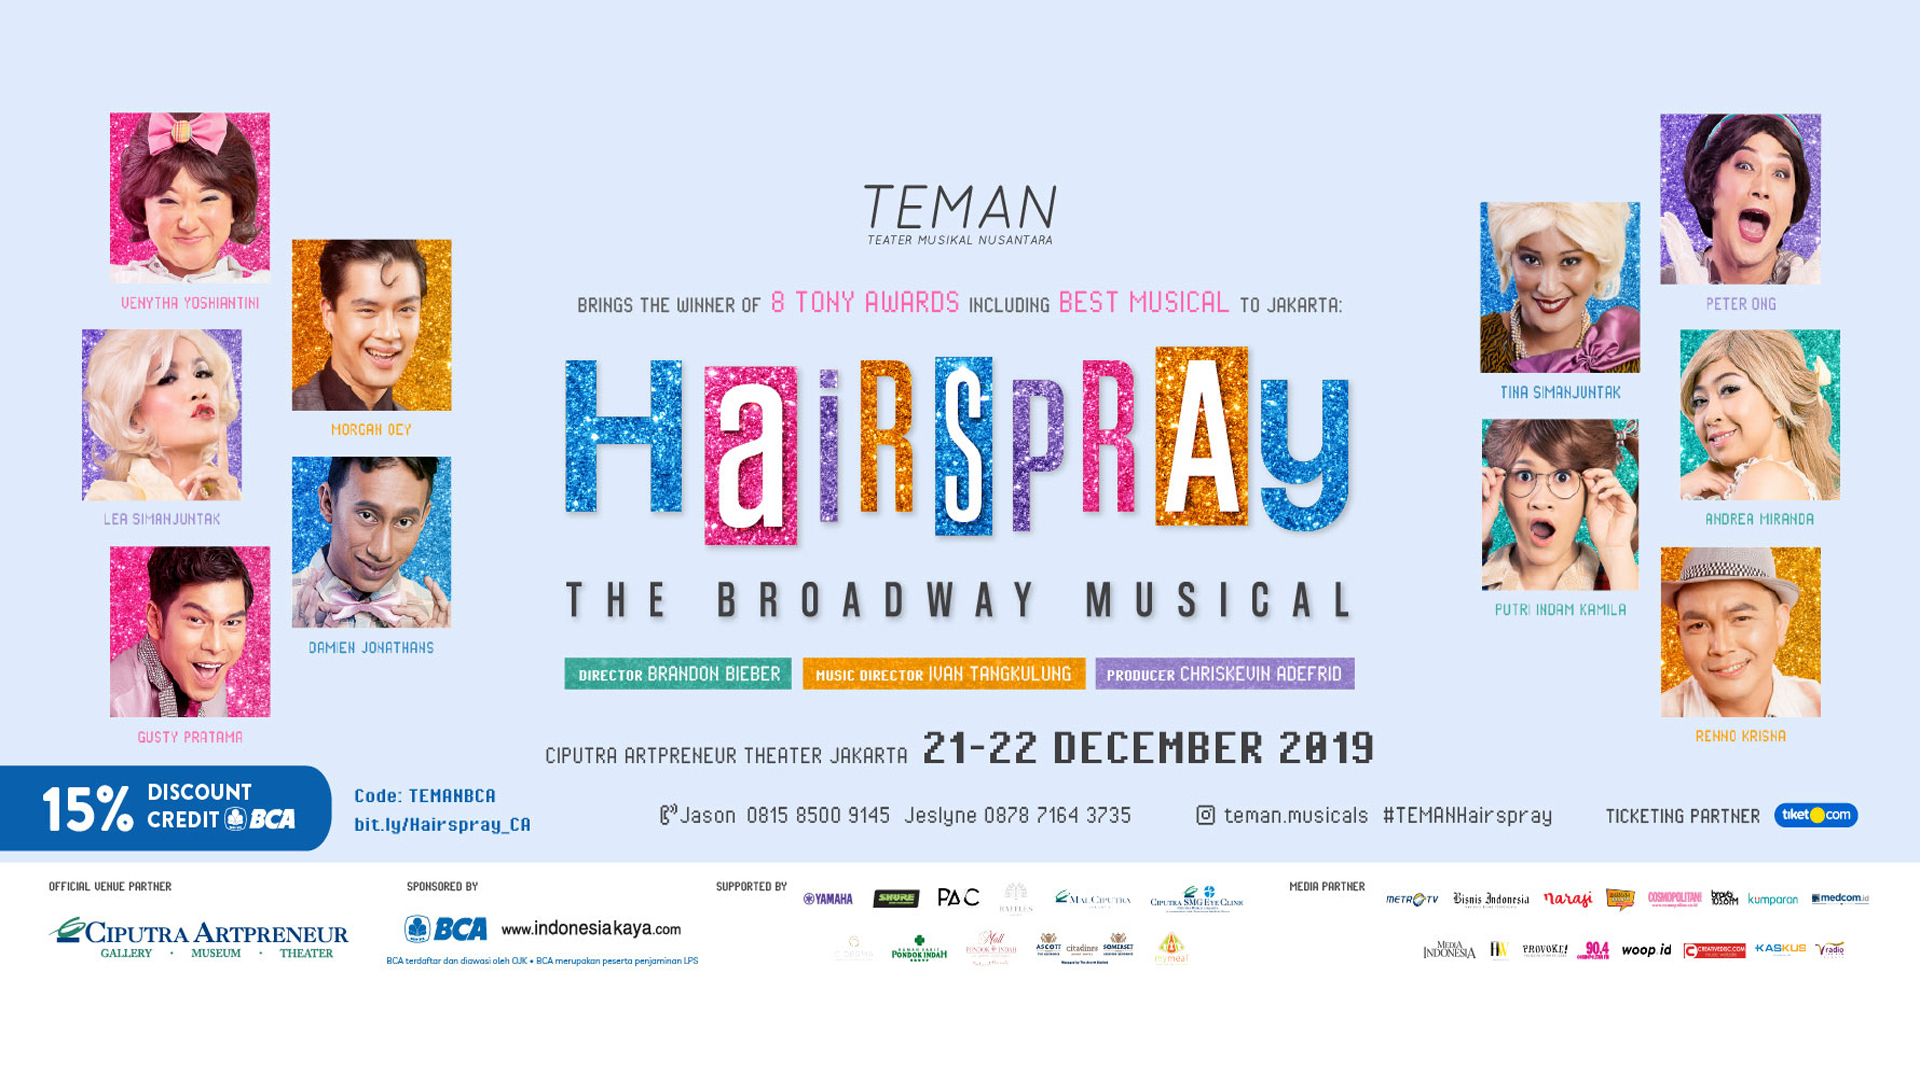 HAIRSPRAY The Broadway Musical